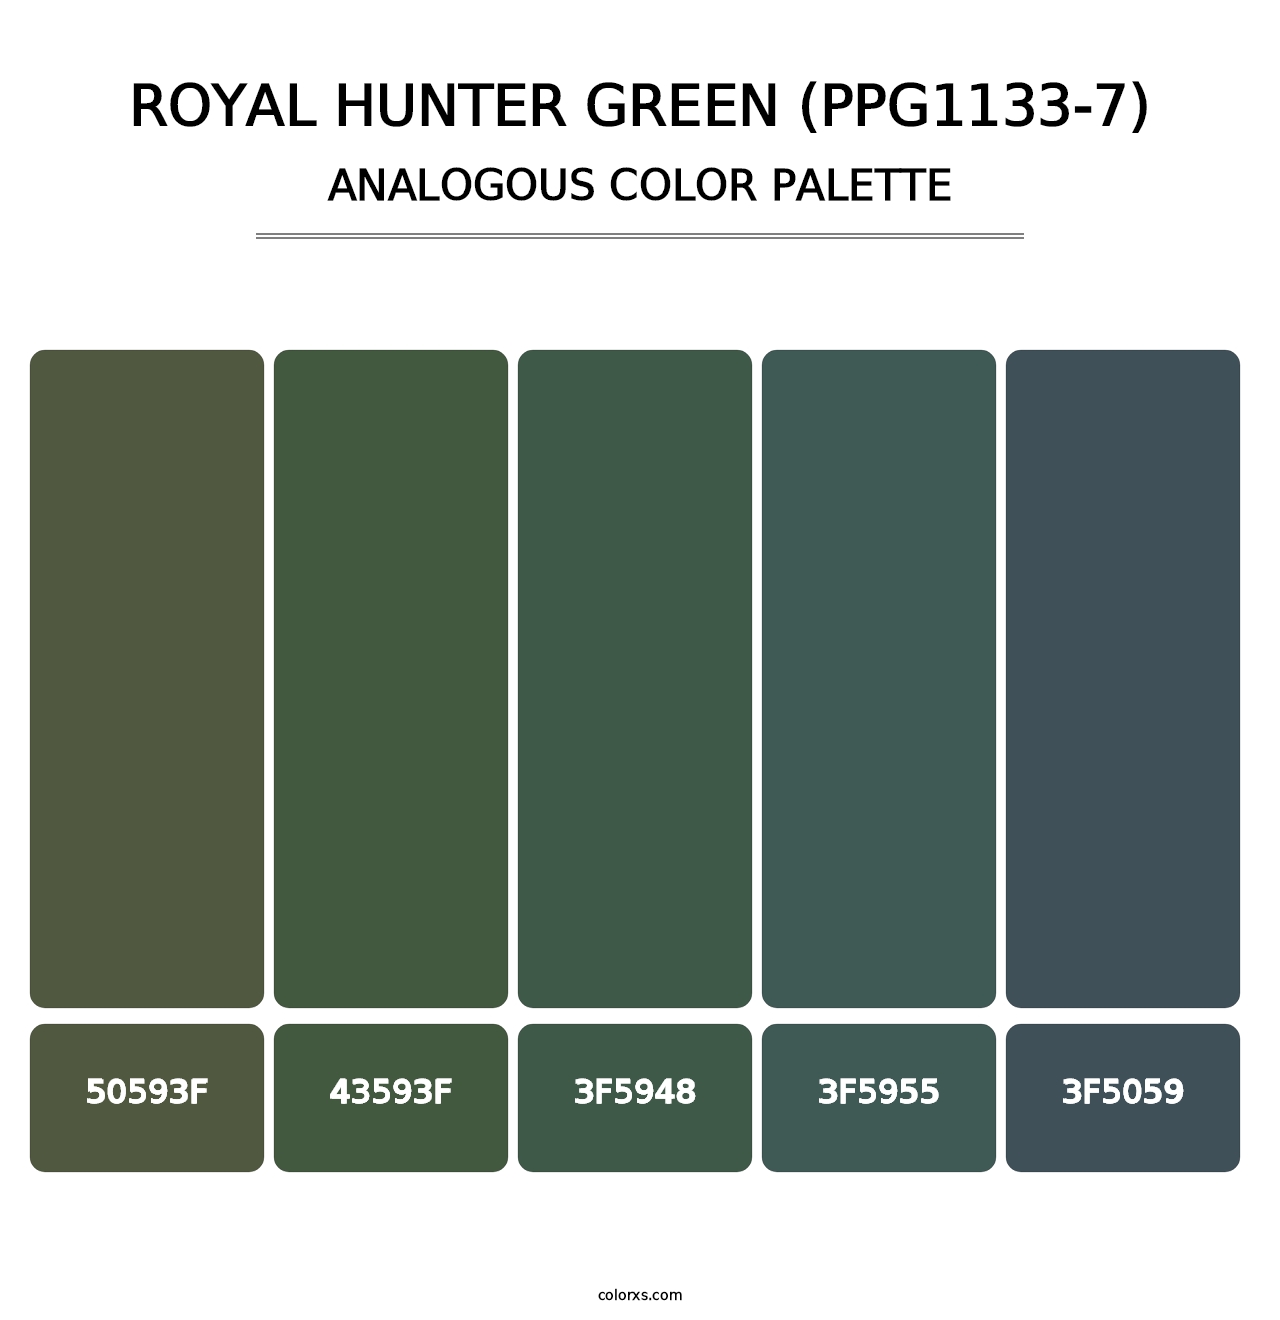 Royal Hunter Green (PPG1133-7) - Analogous Color Palette